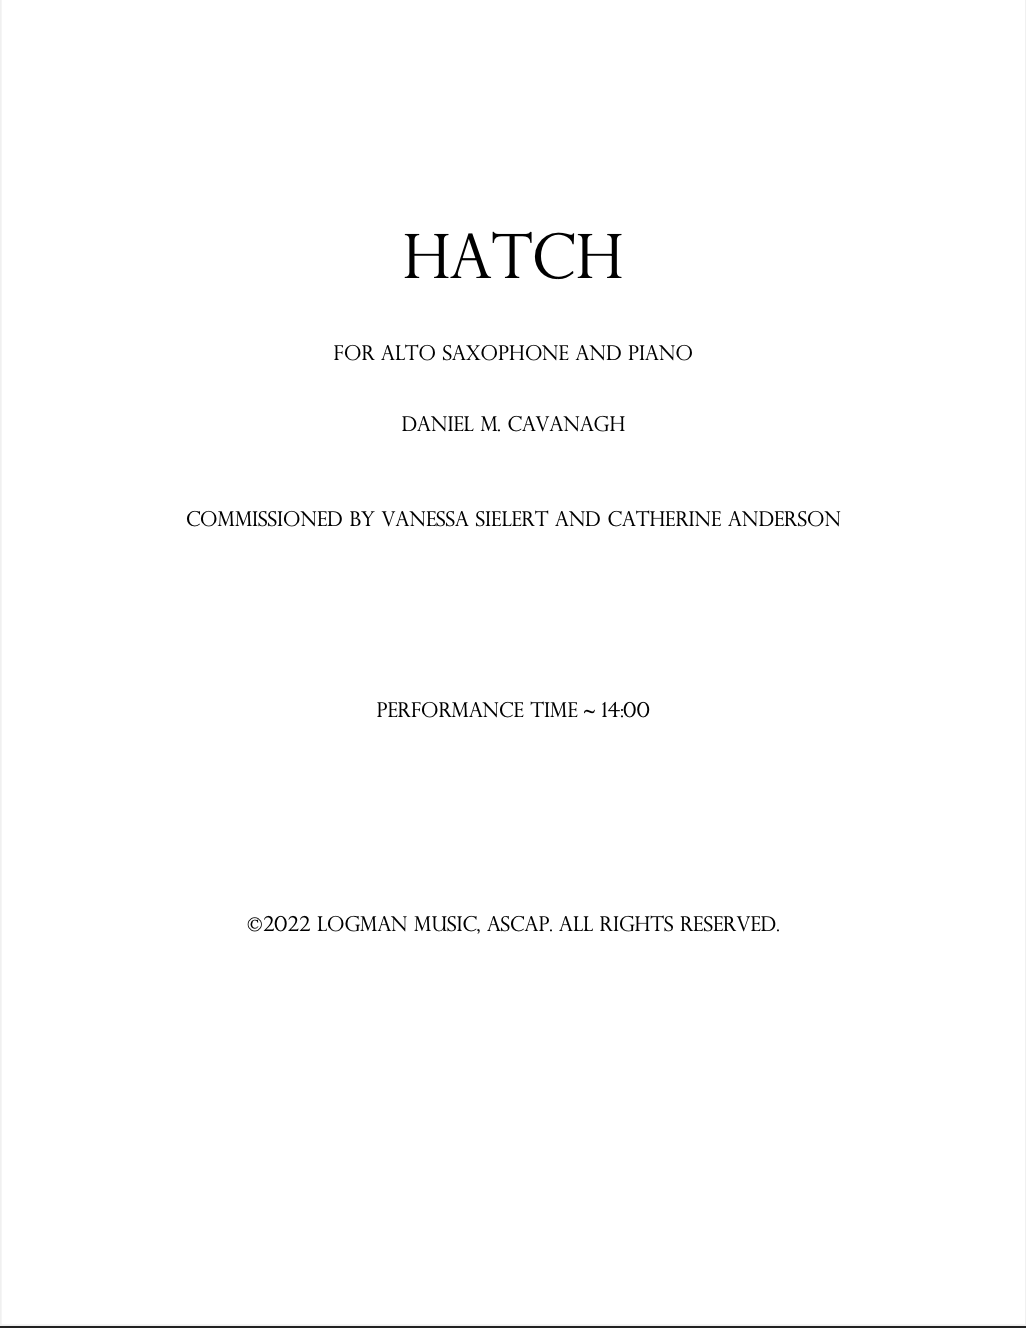 Hatch by Dan Cavanagh